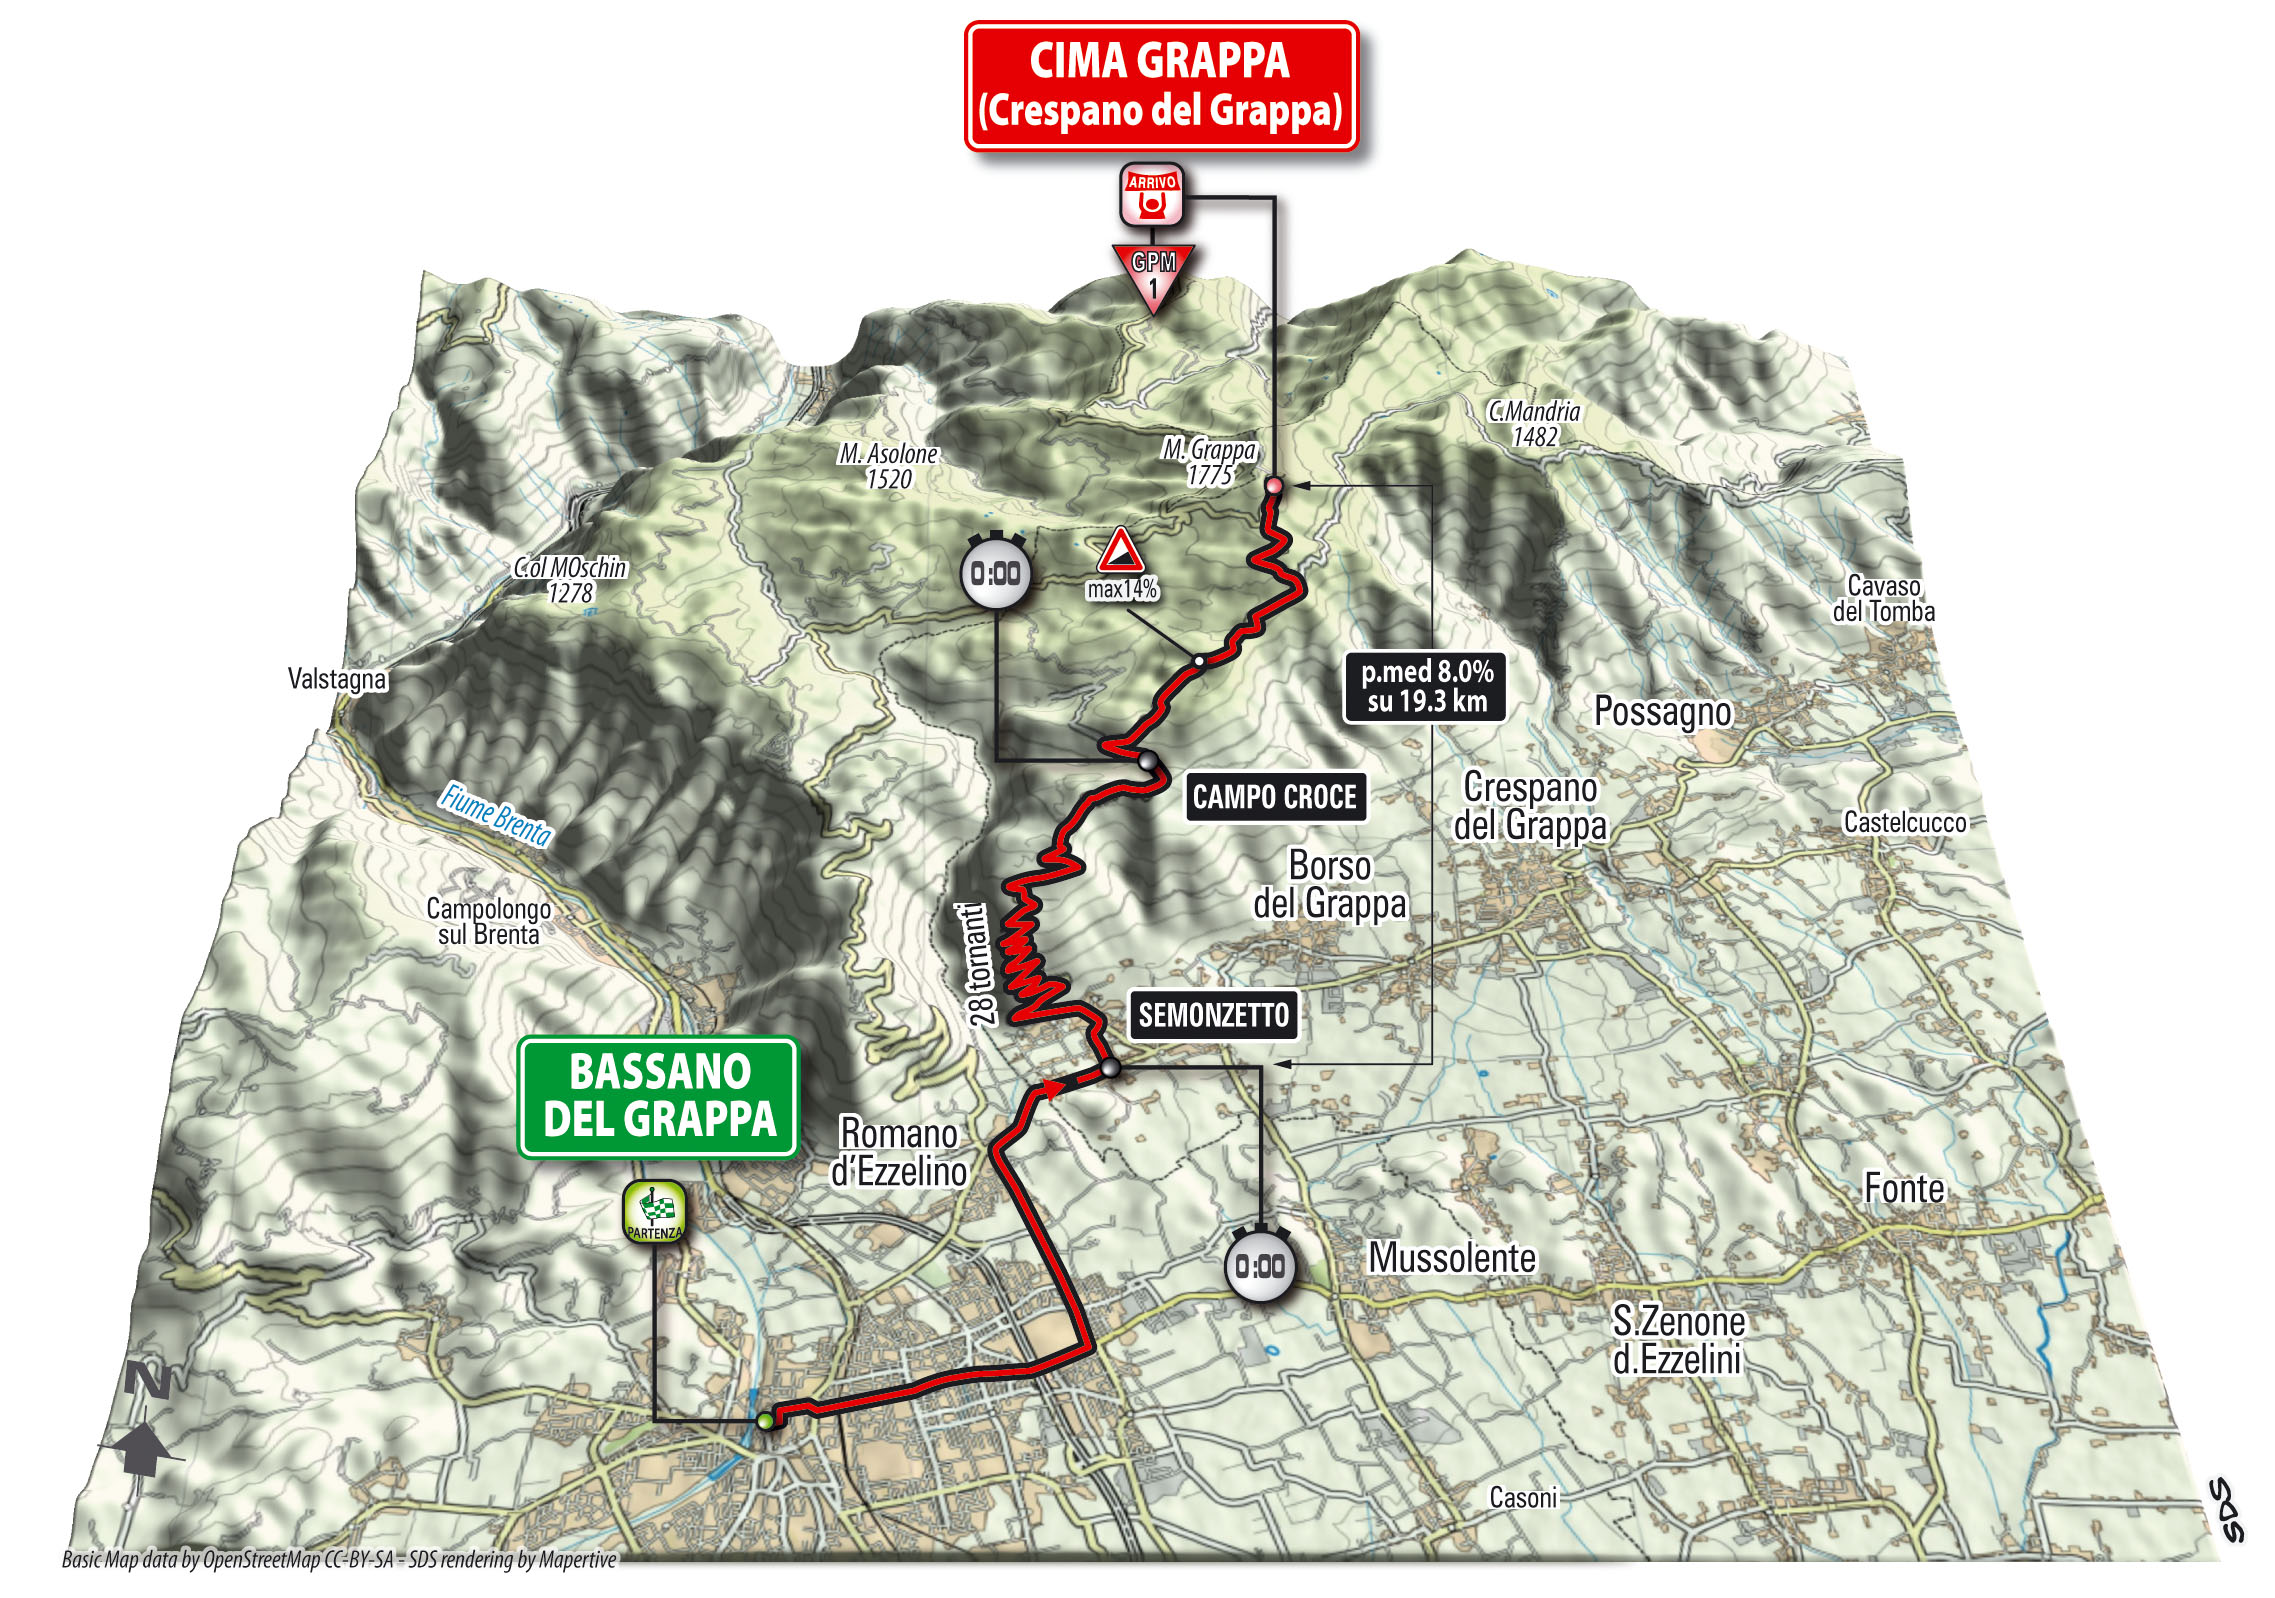 Giro-stage19-cima